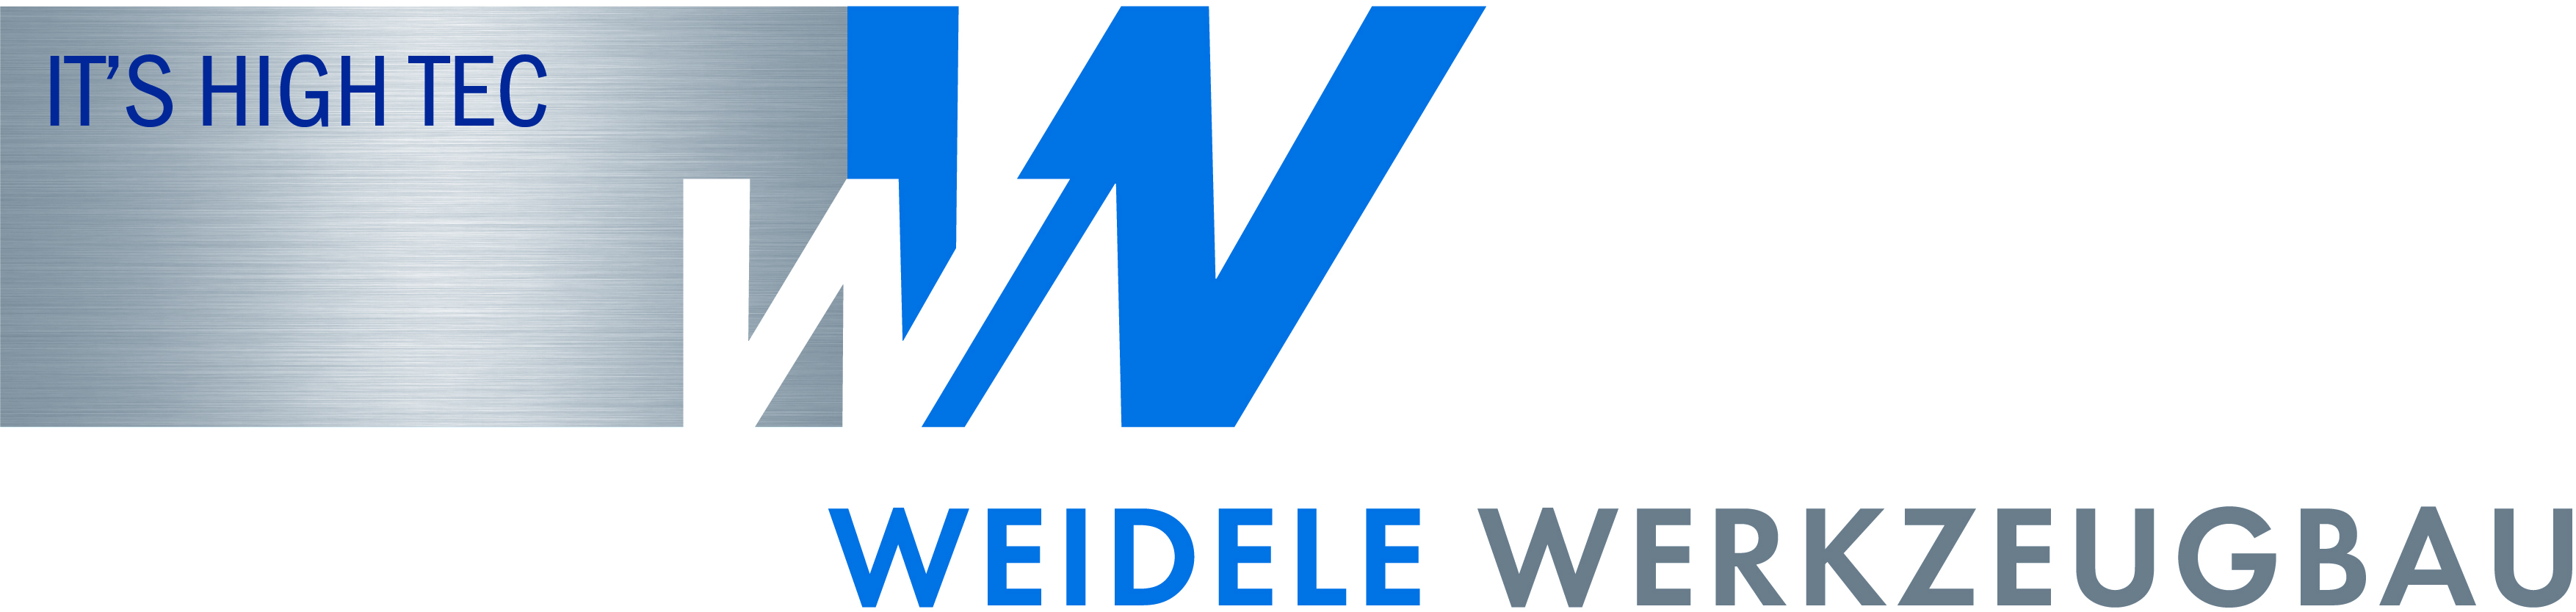 weidele-logo-4c